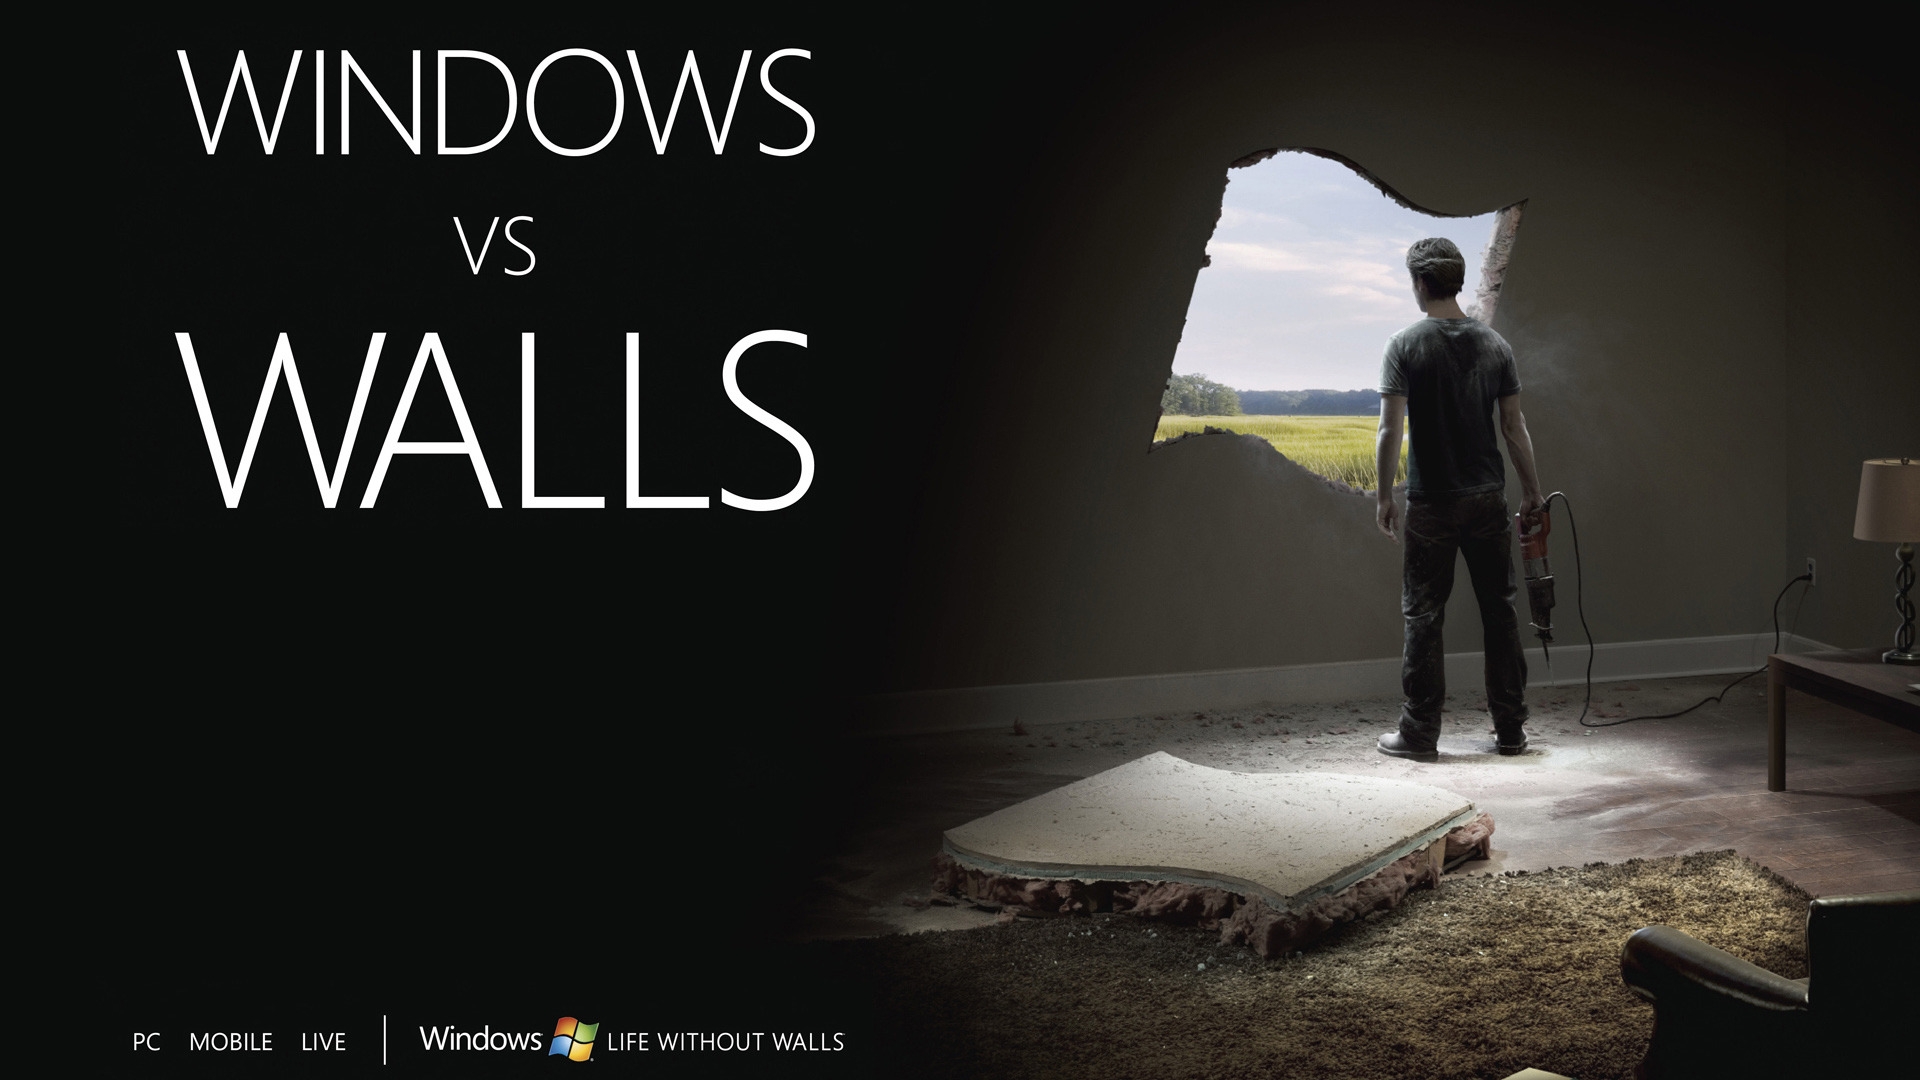 Windows vs Walls for 1920 x 1080 HDTV 1080p resolution